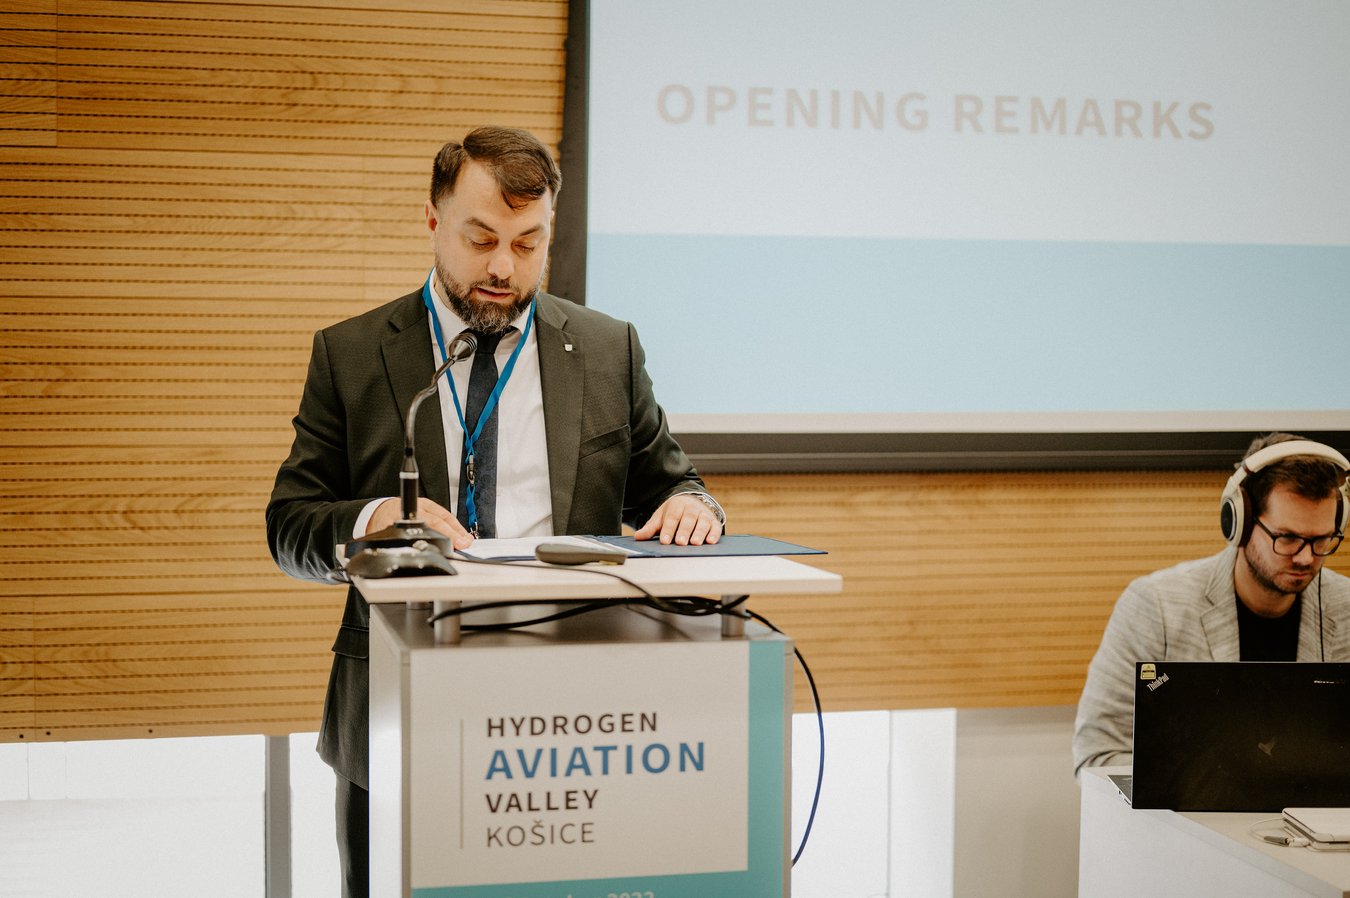 Hydrogen Aviation Valley Košice initiative kicks off